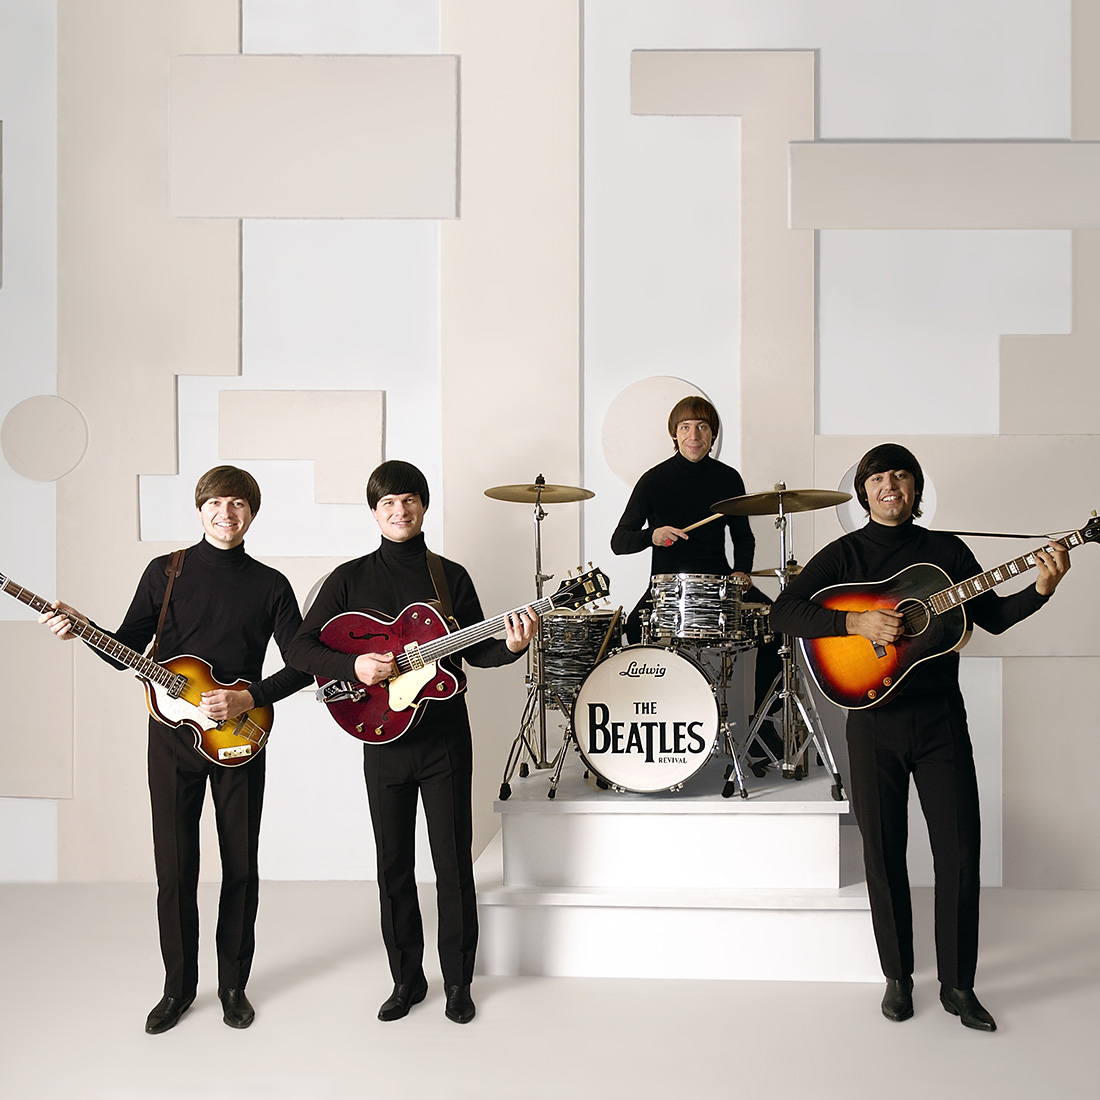 Beatles Tribute Show